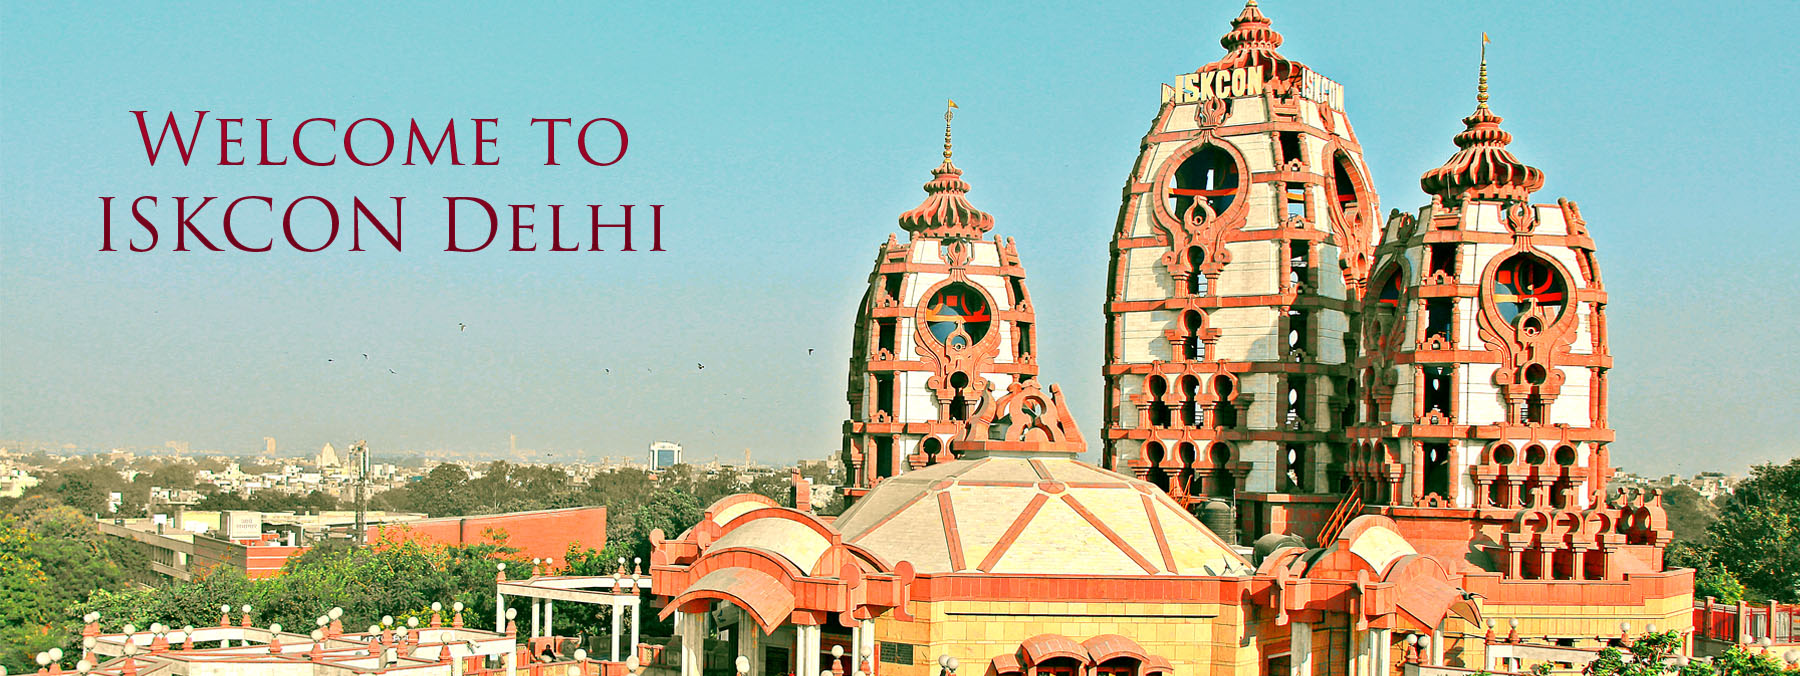 Visit Famous Iskcon Temple in Delhi